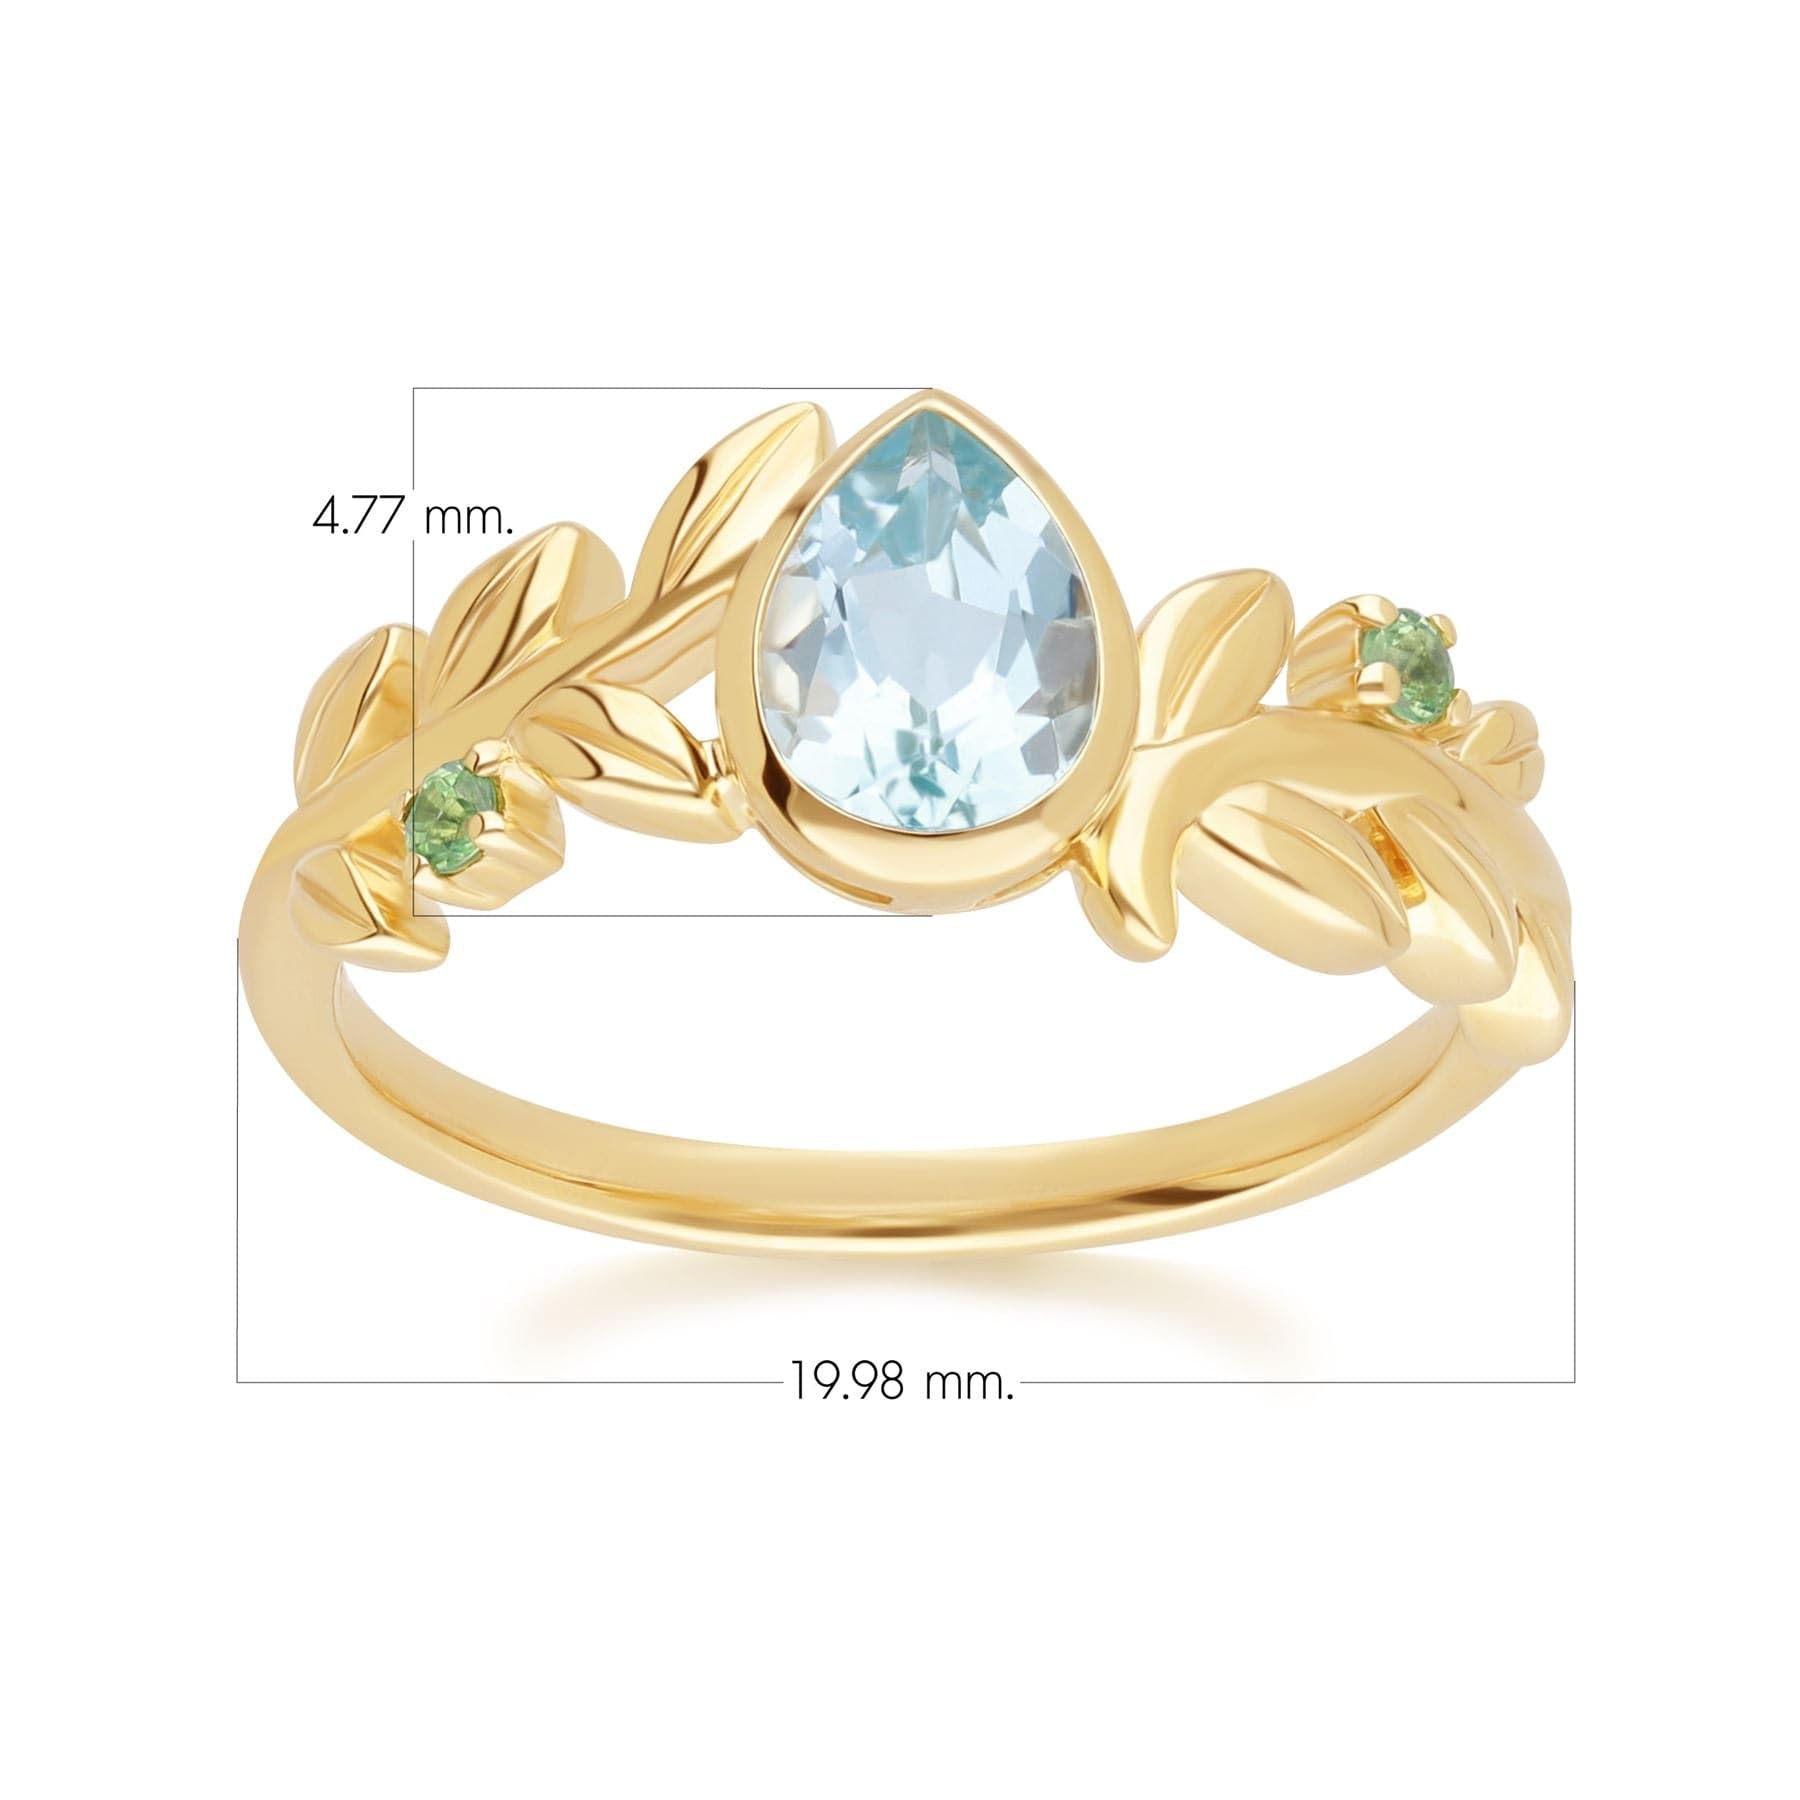 135R2091019 O Leaf Sky Blue topaz & Tsavorite Ring In 9ct Yellow Gold Dimensions